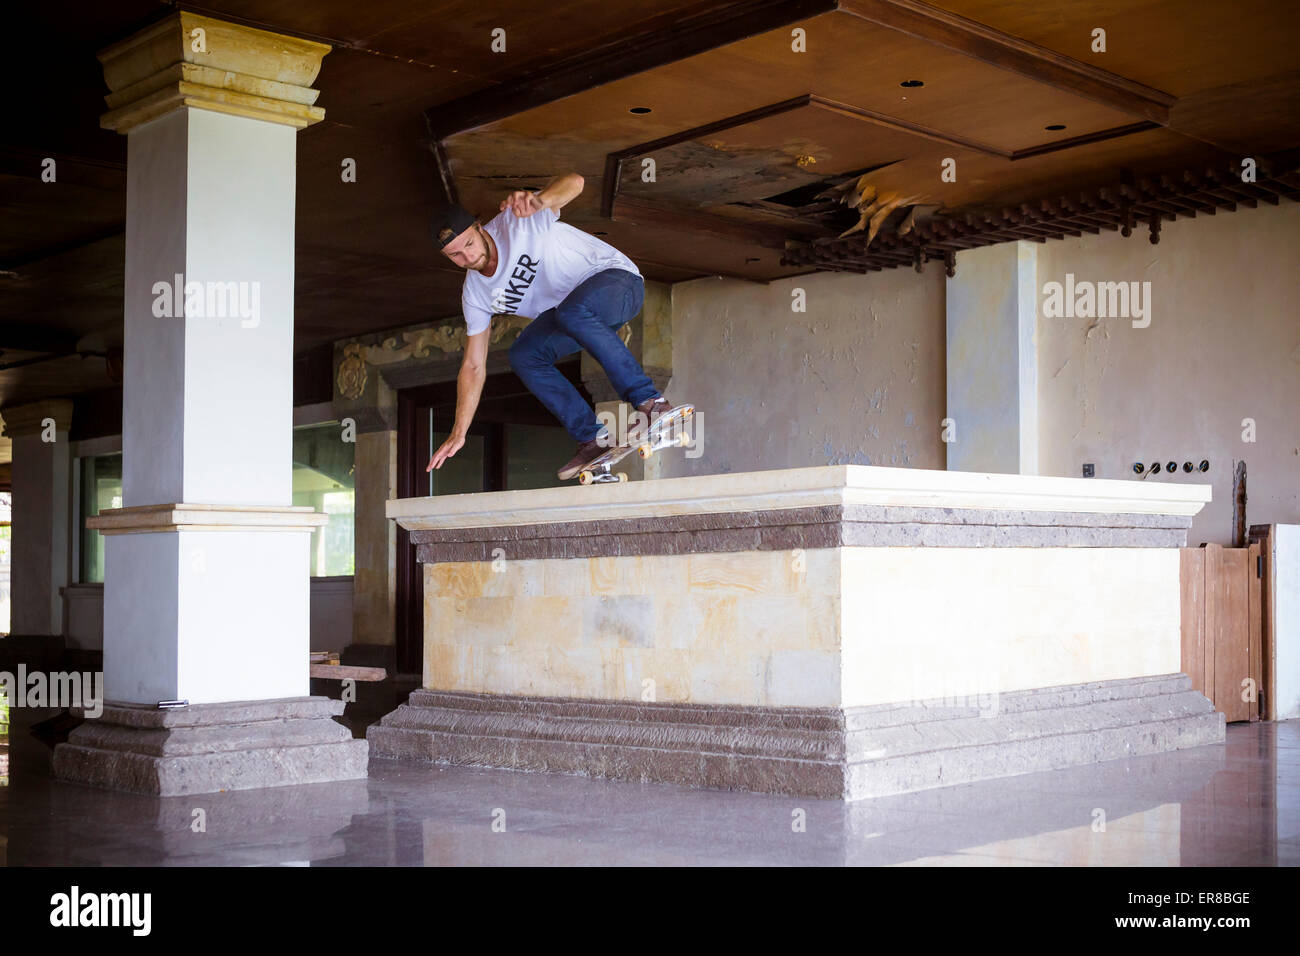 Skateboarding in verlassenen Hotel, Bali, Indonesien. Stockfoto